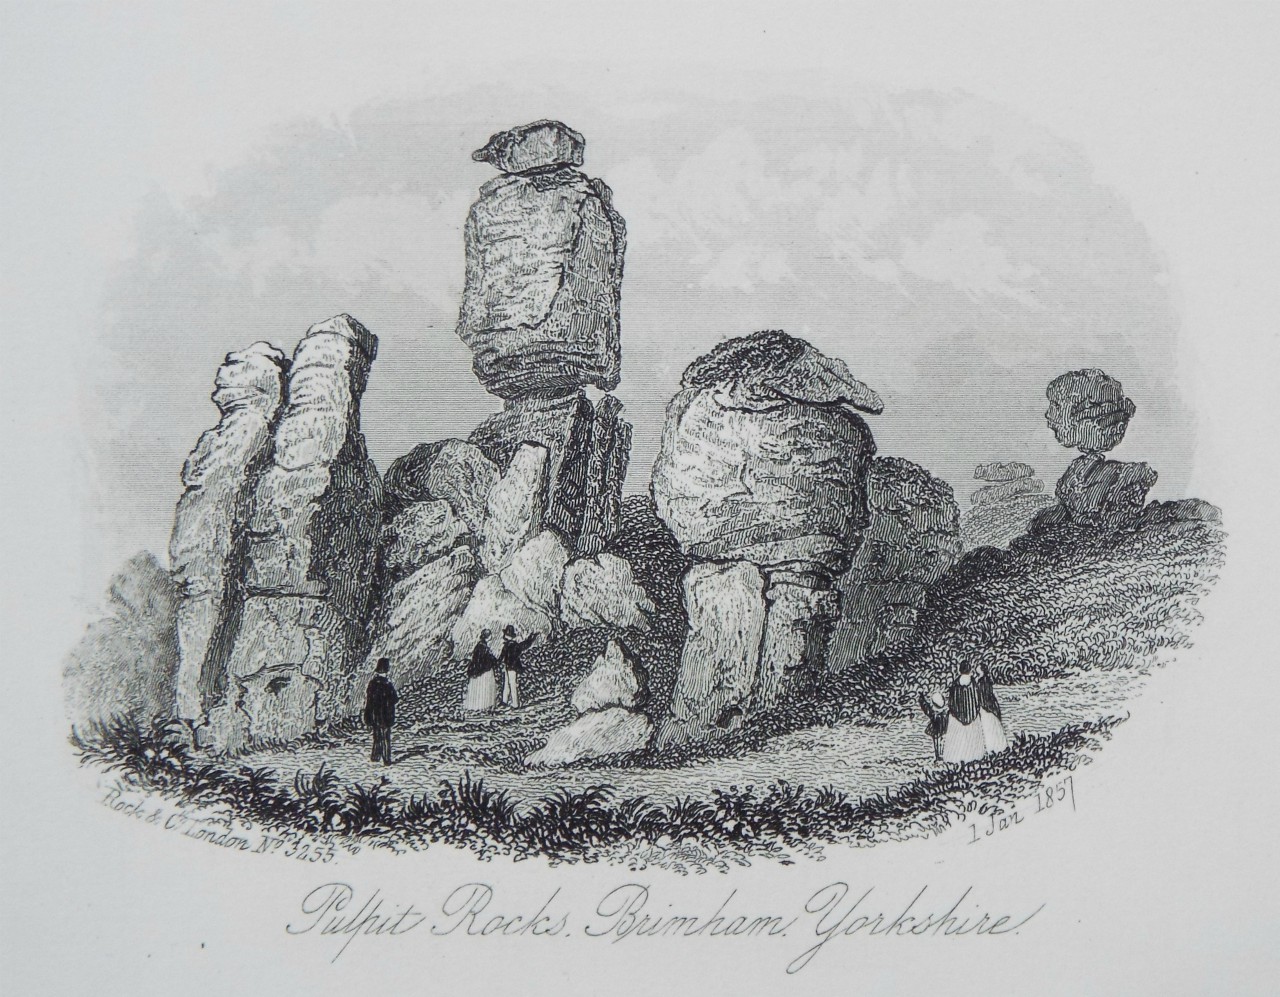 Steel Vignette - Pulpit Rocks, Brimham, Yorkshire. - Rock